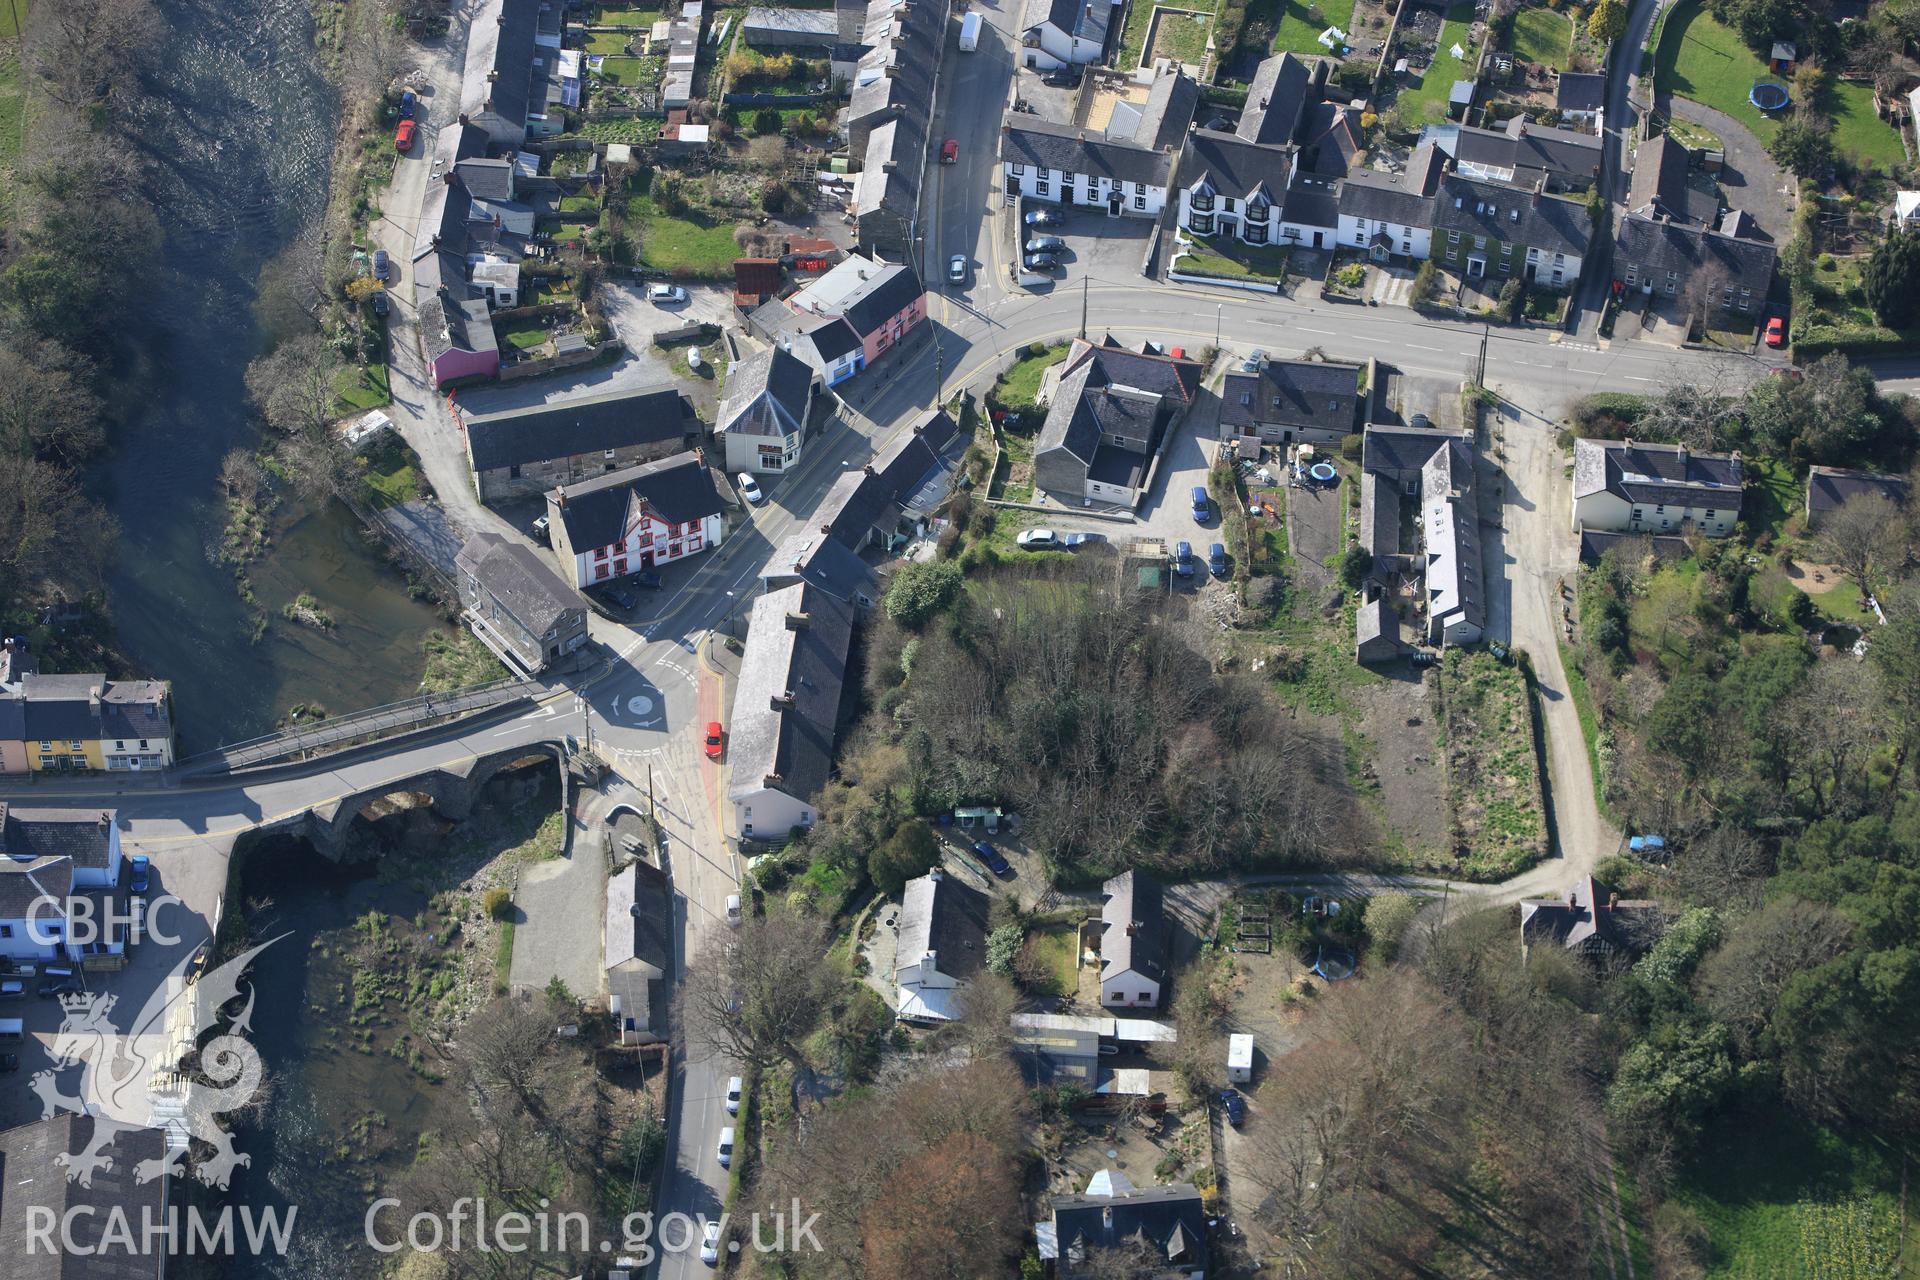 RCAHMW colour oblique aerial photograph of Adpar Motte. Taken on 13 April 2010 by Toby Driver